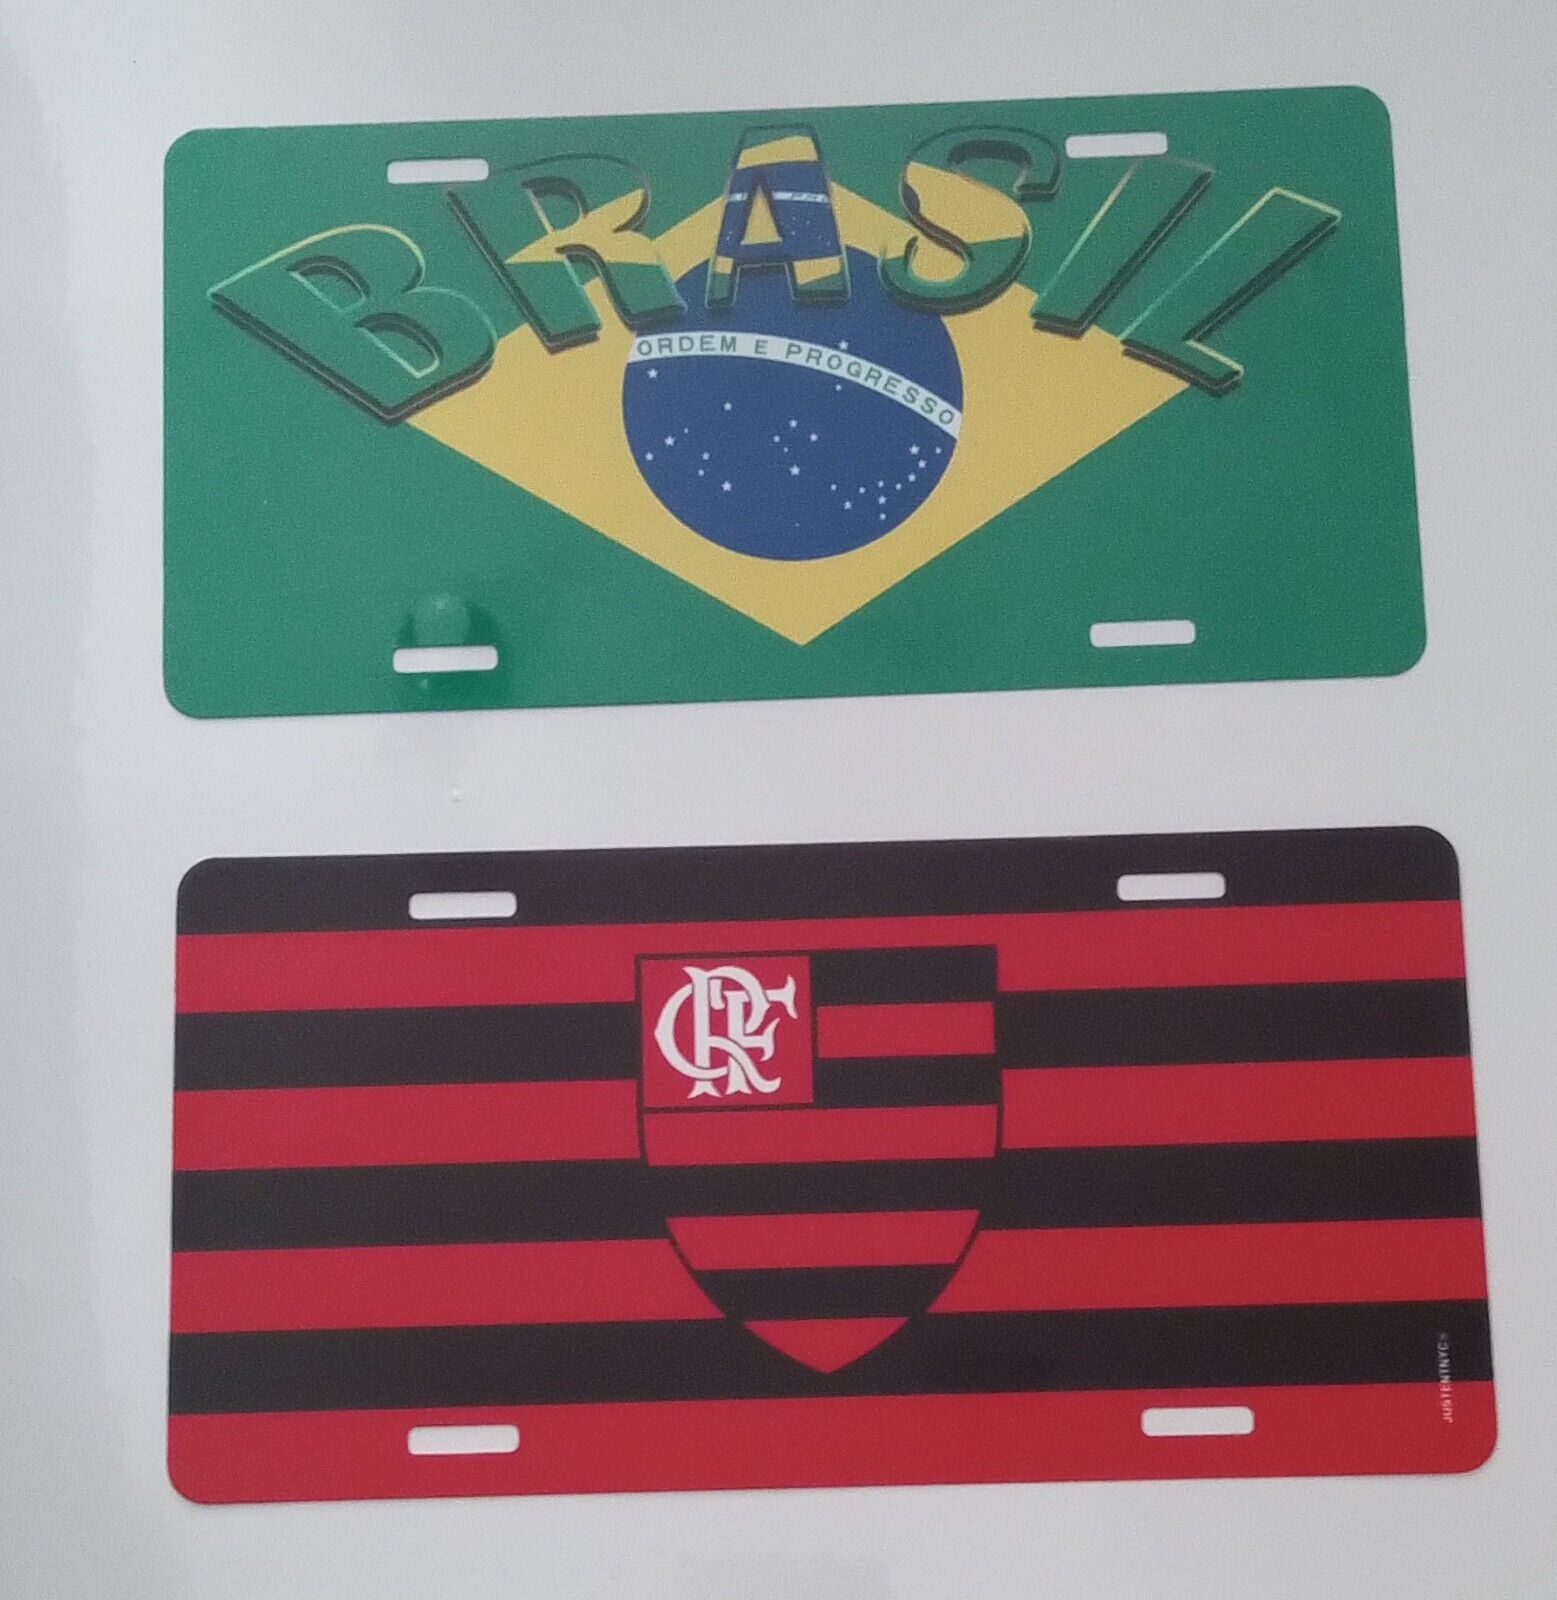 2 BRAZIL GIFTS: 1 BRAZIL  LICENSE PLATE + 1 FLAMENGO LICENSE PLATE $30